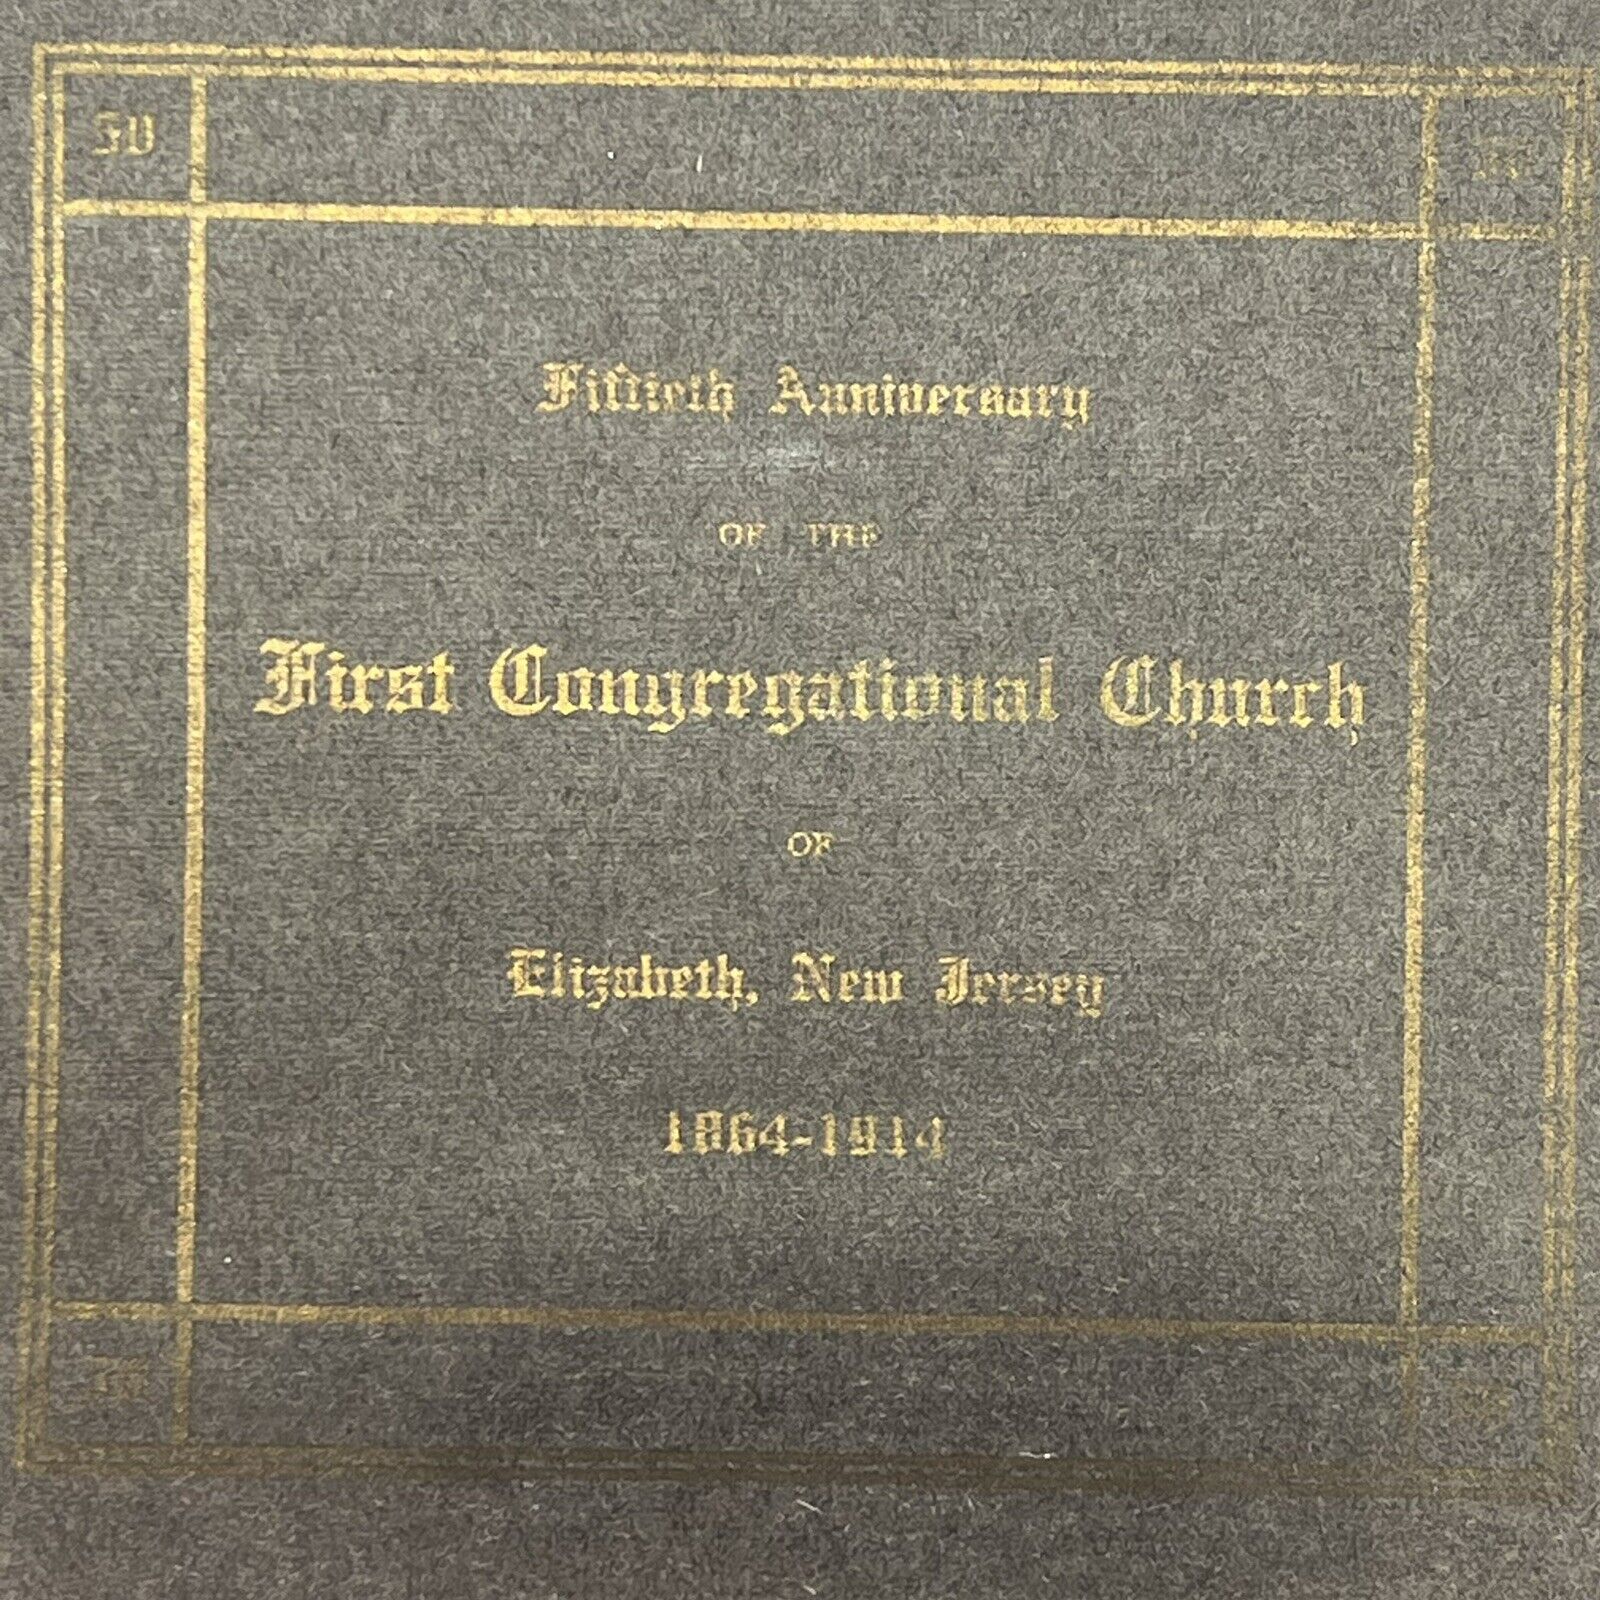 Elizabeth New Jersey 1914 First Congressional Church 50th Anniversary Souvenir